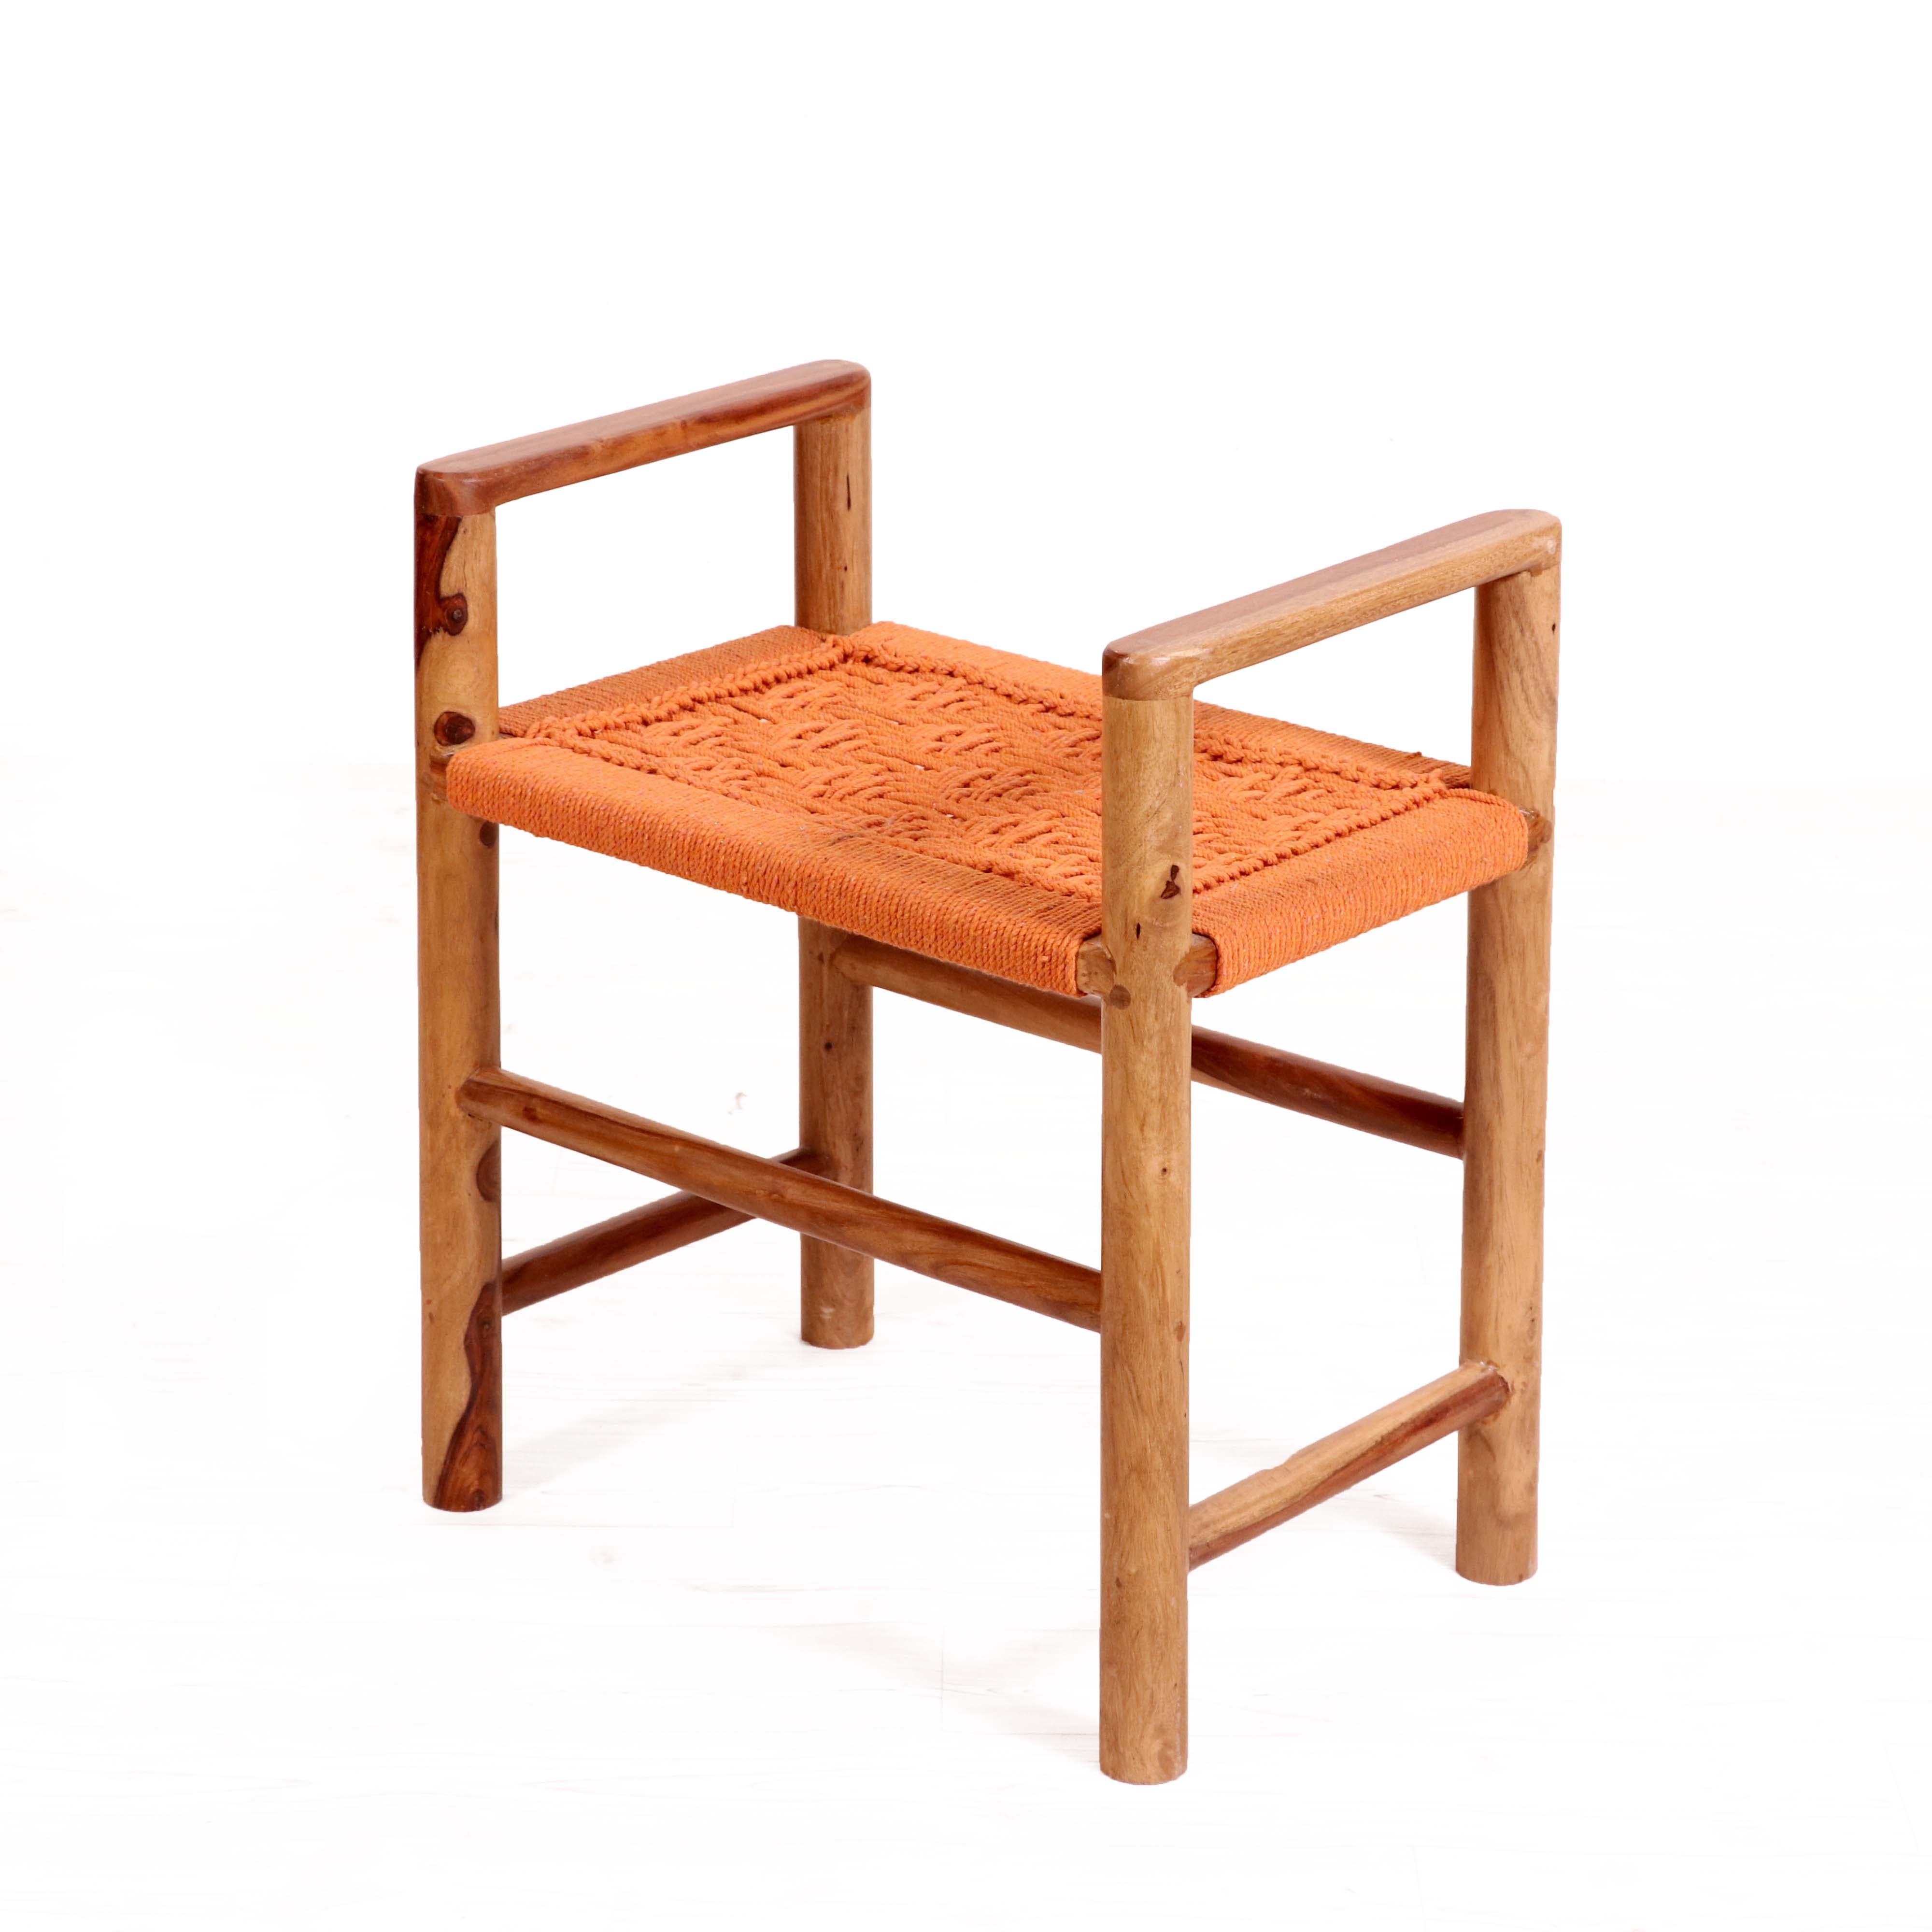 Sheesham wood weaved stool Stool